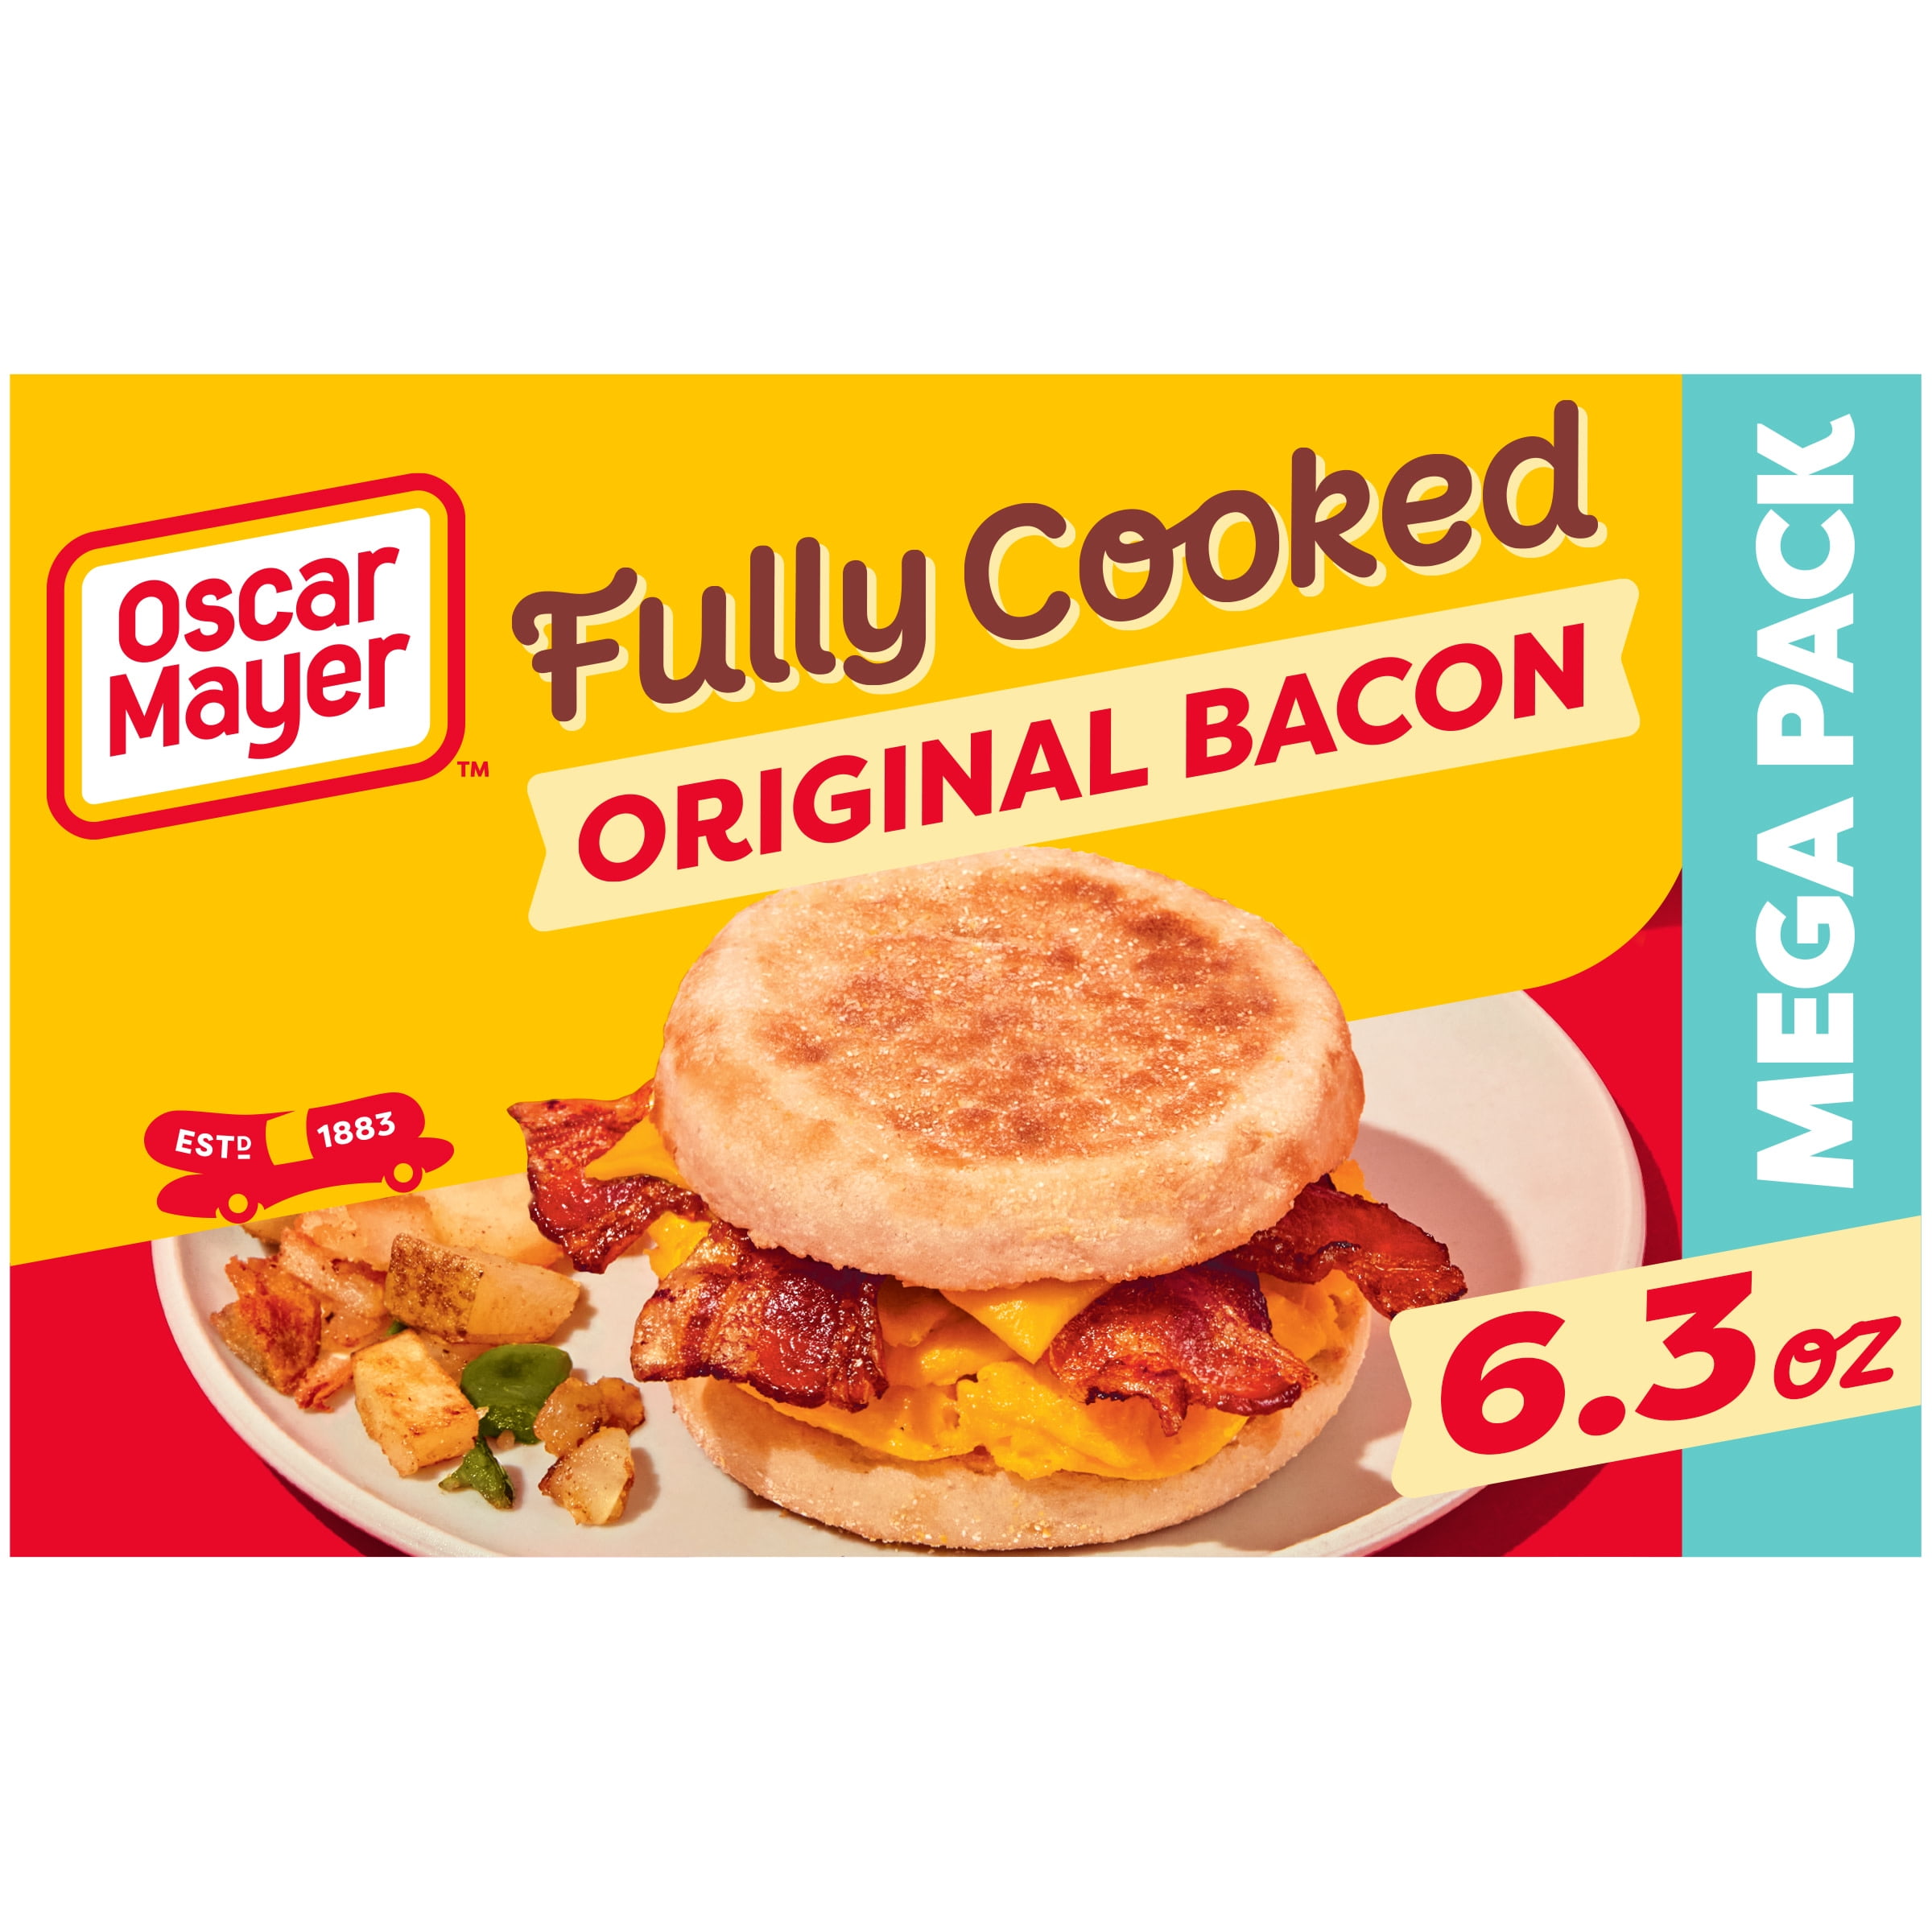 Oscar Mayer Fully Cooked Original Bacon Mega Pack, 6.3 oz Box